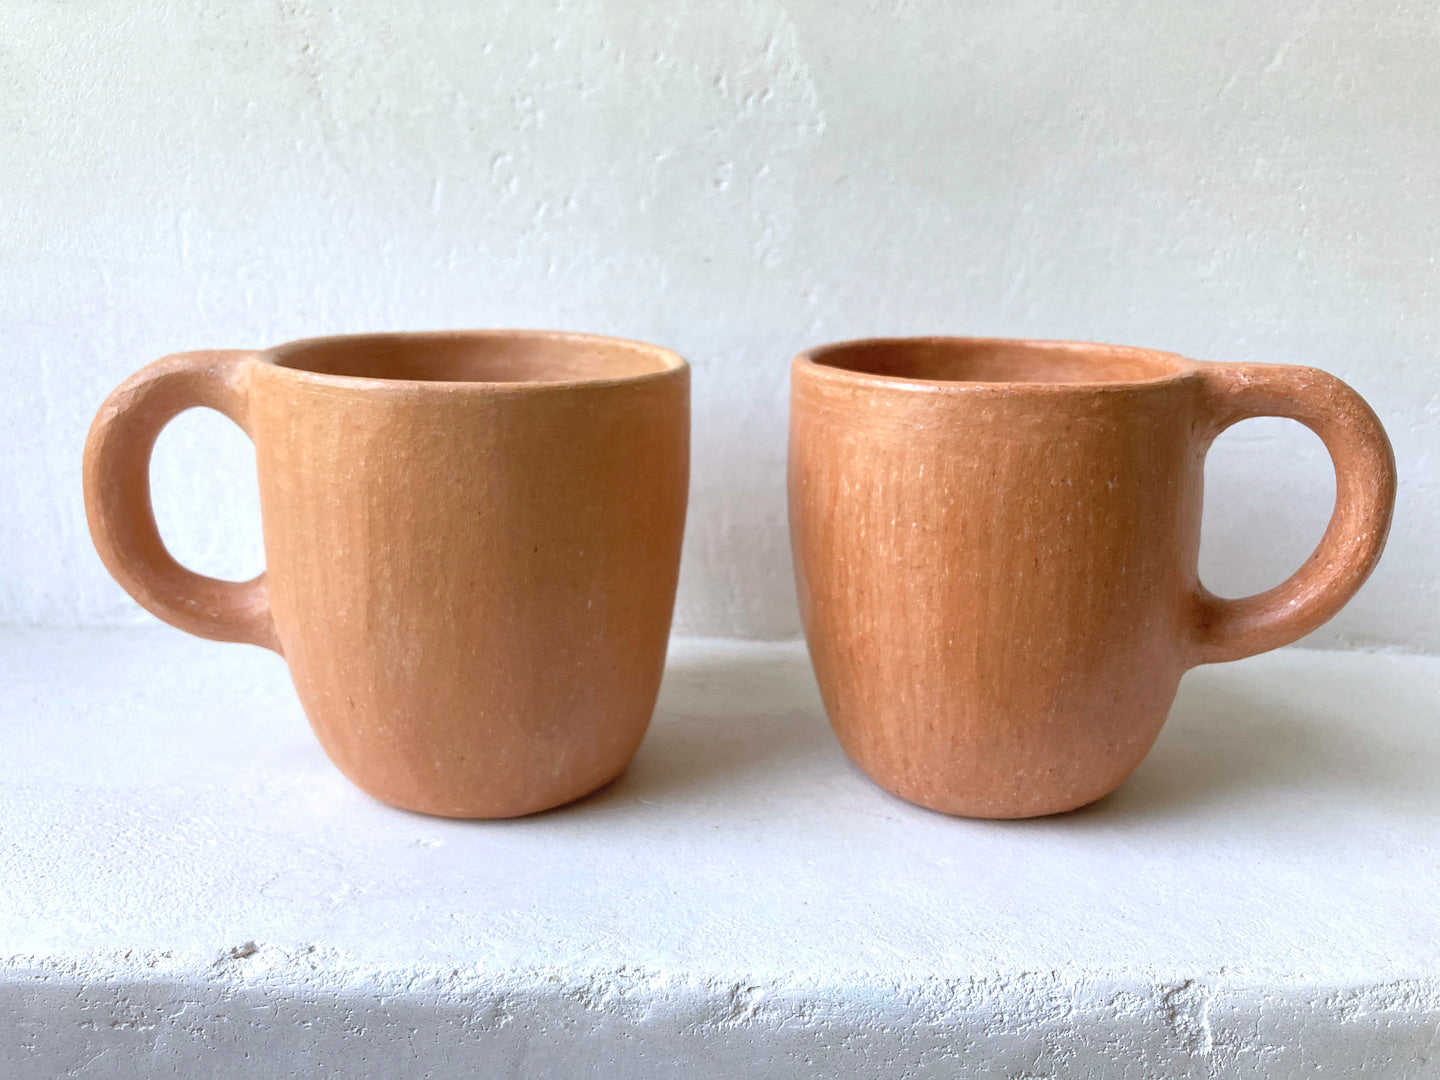 Pair of terracotta cups